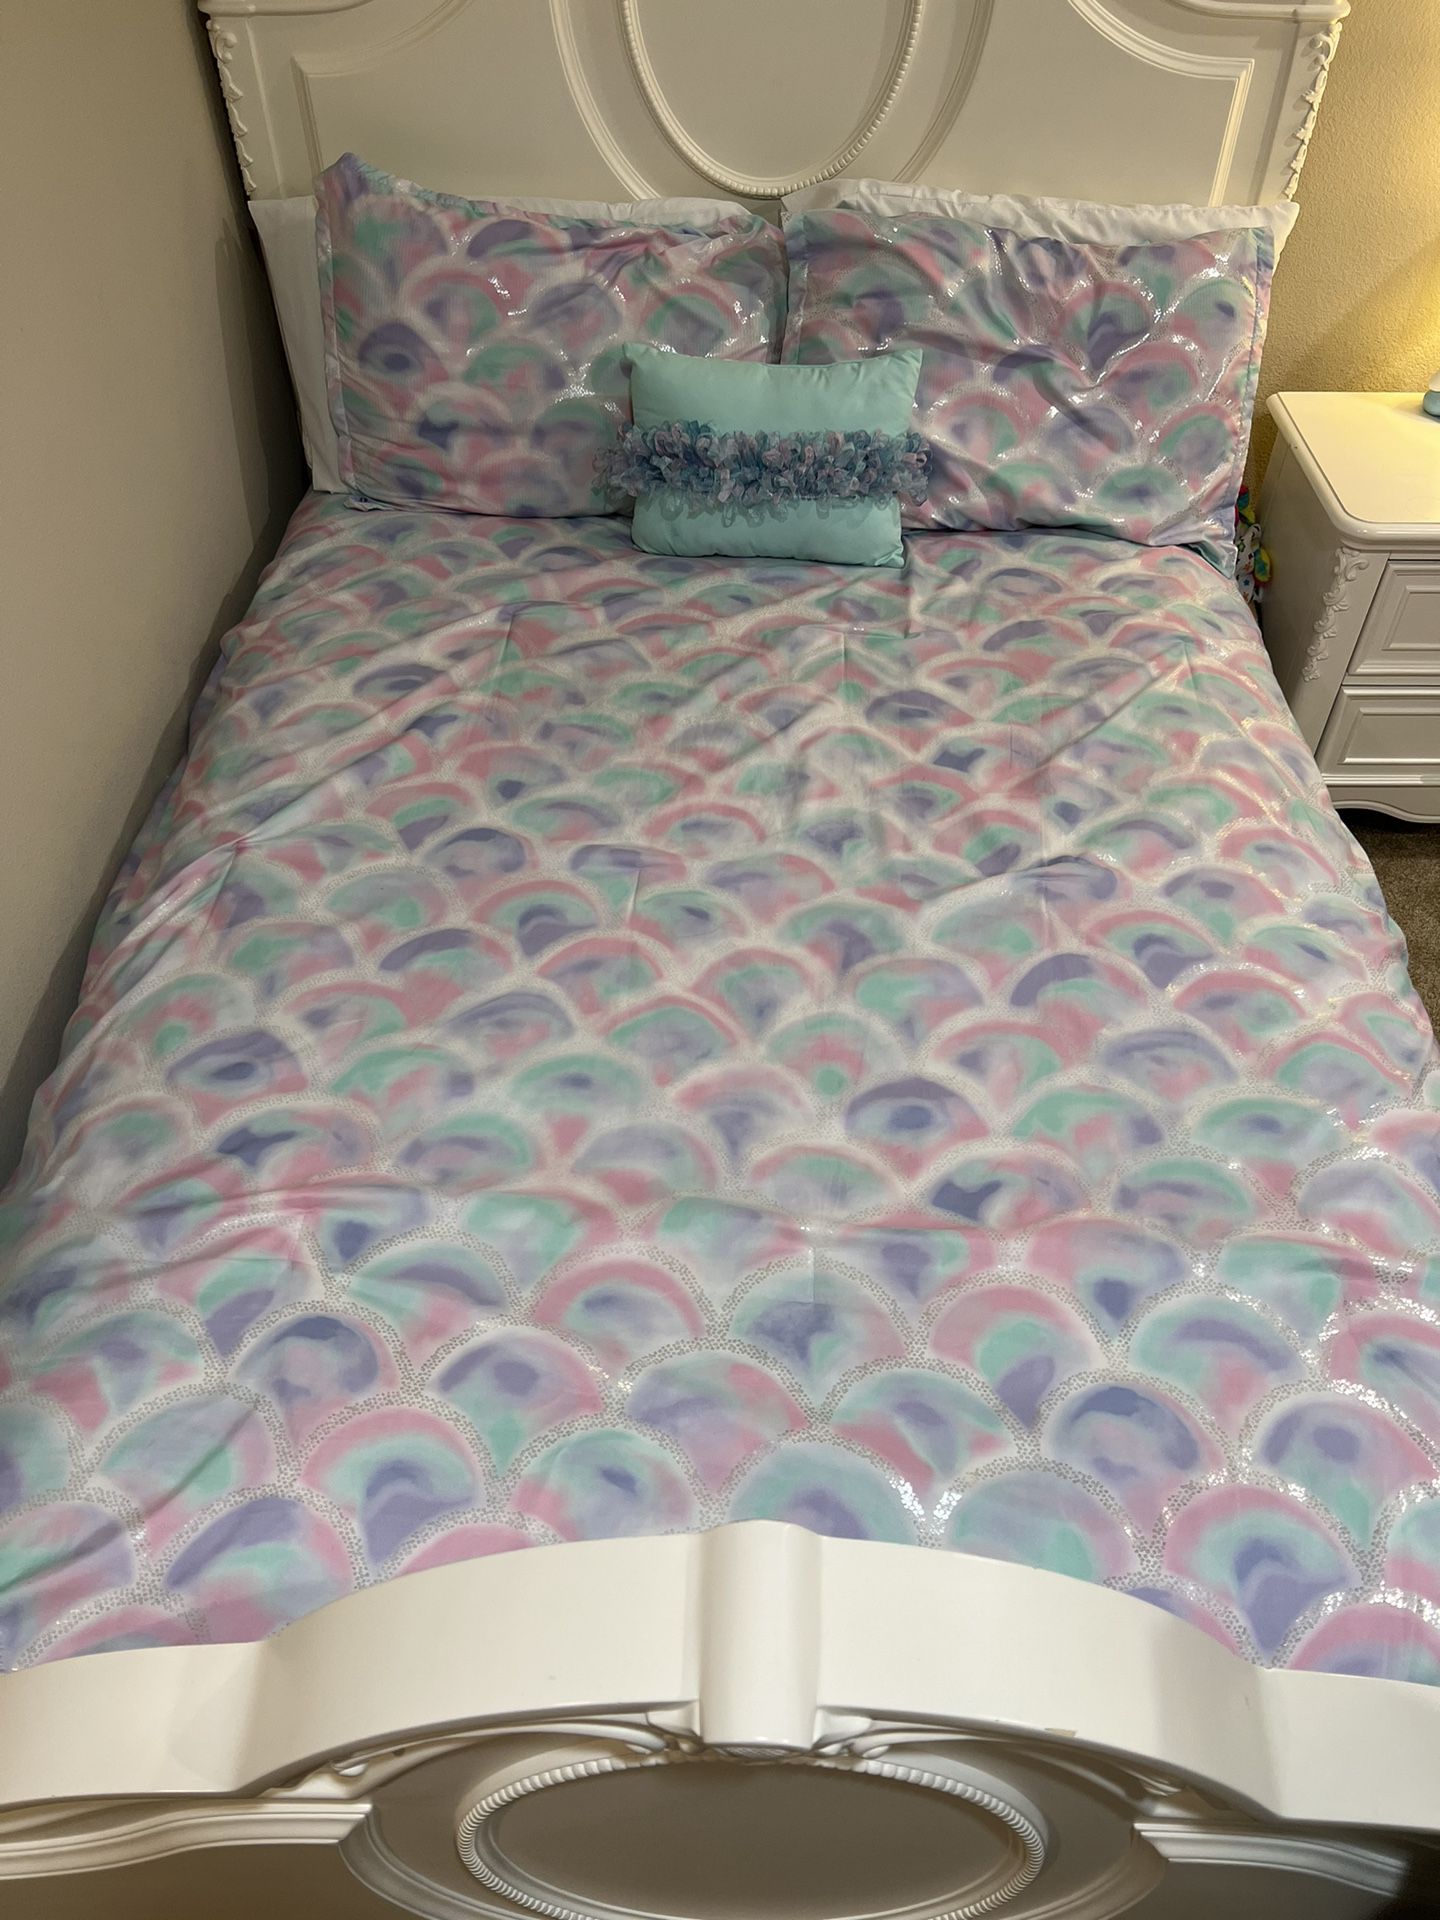 Mermaid Bedroom Decor